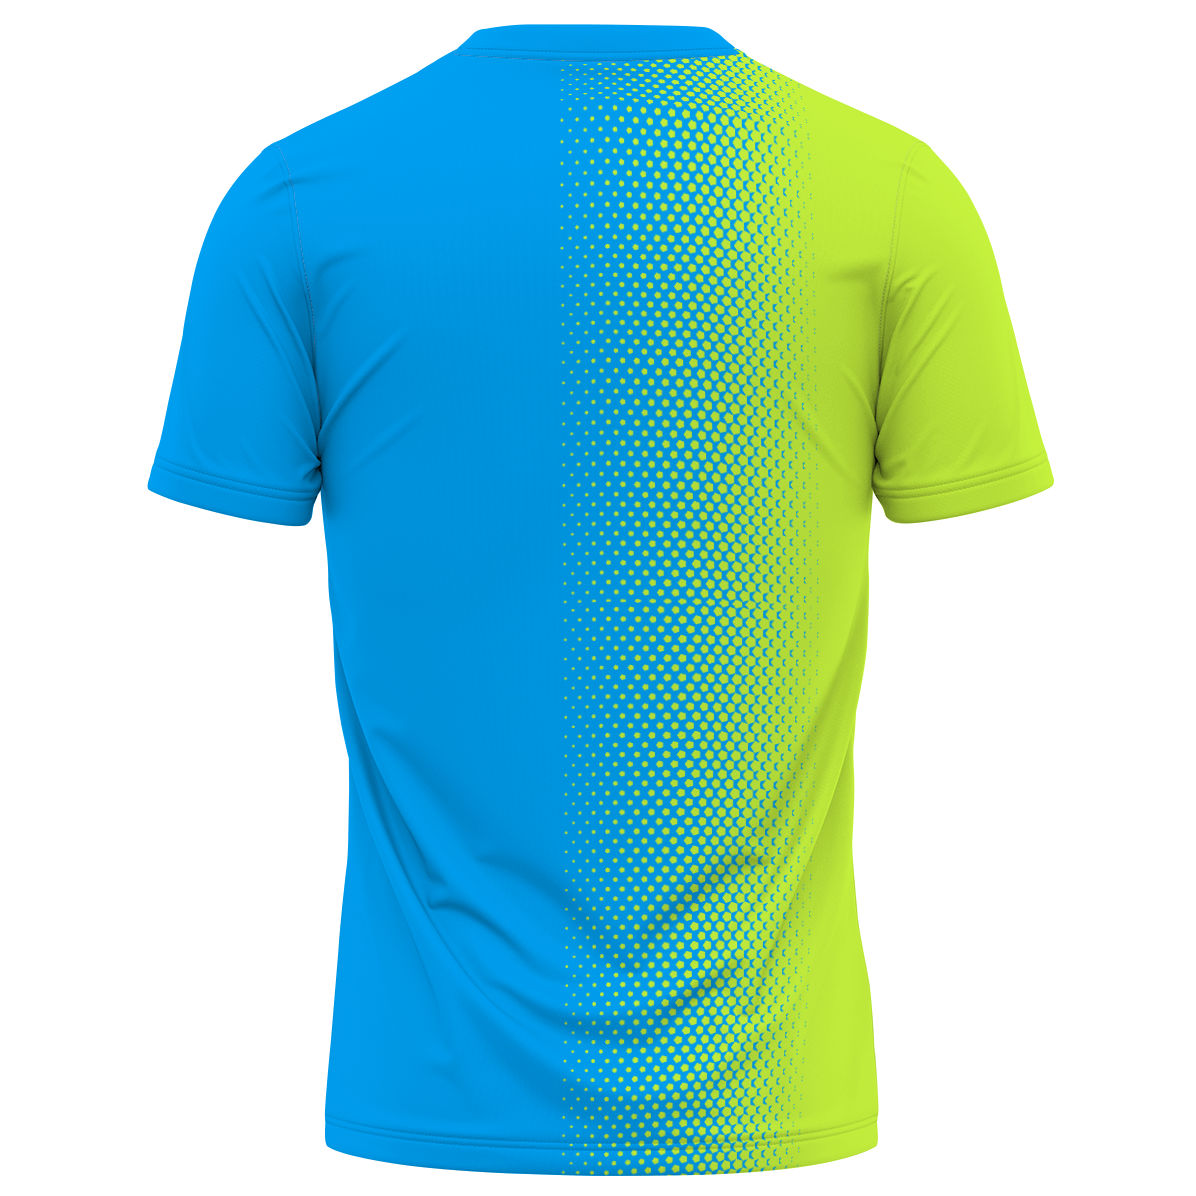 Playera prueba 2 - Performance Shirt